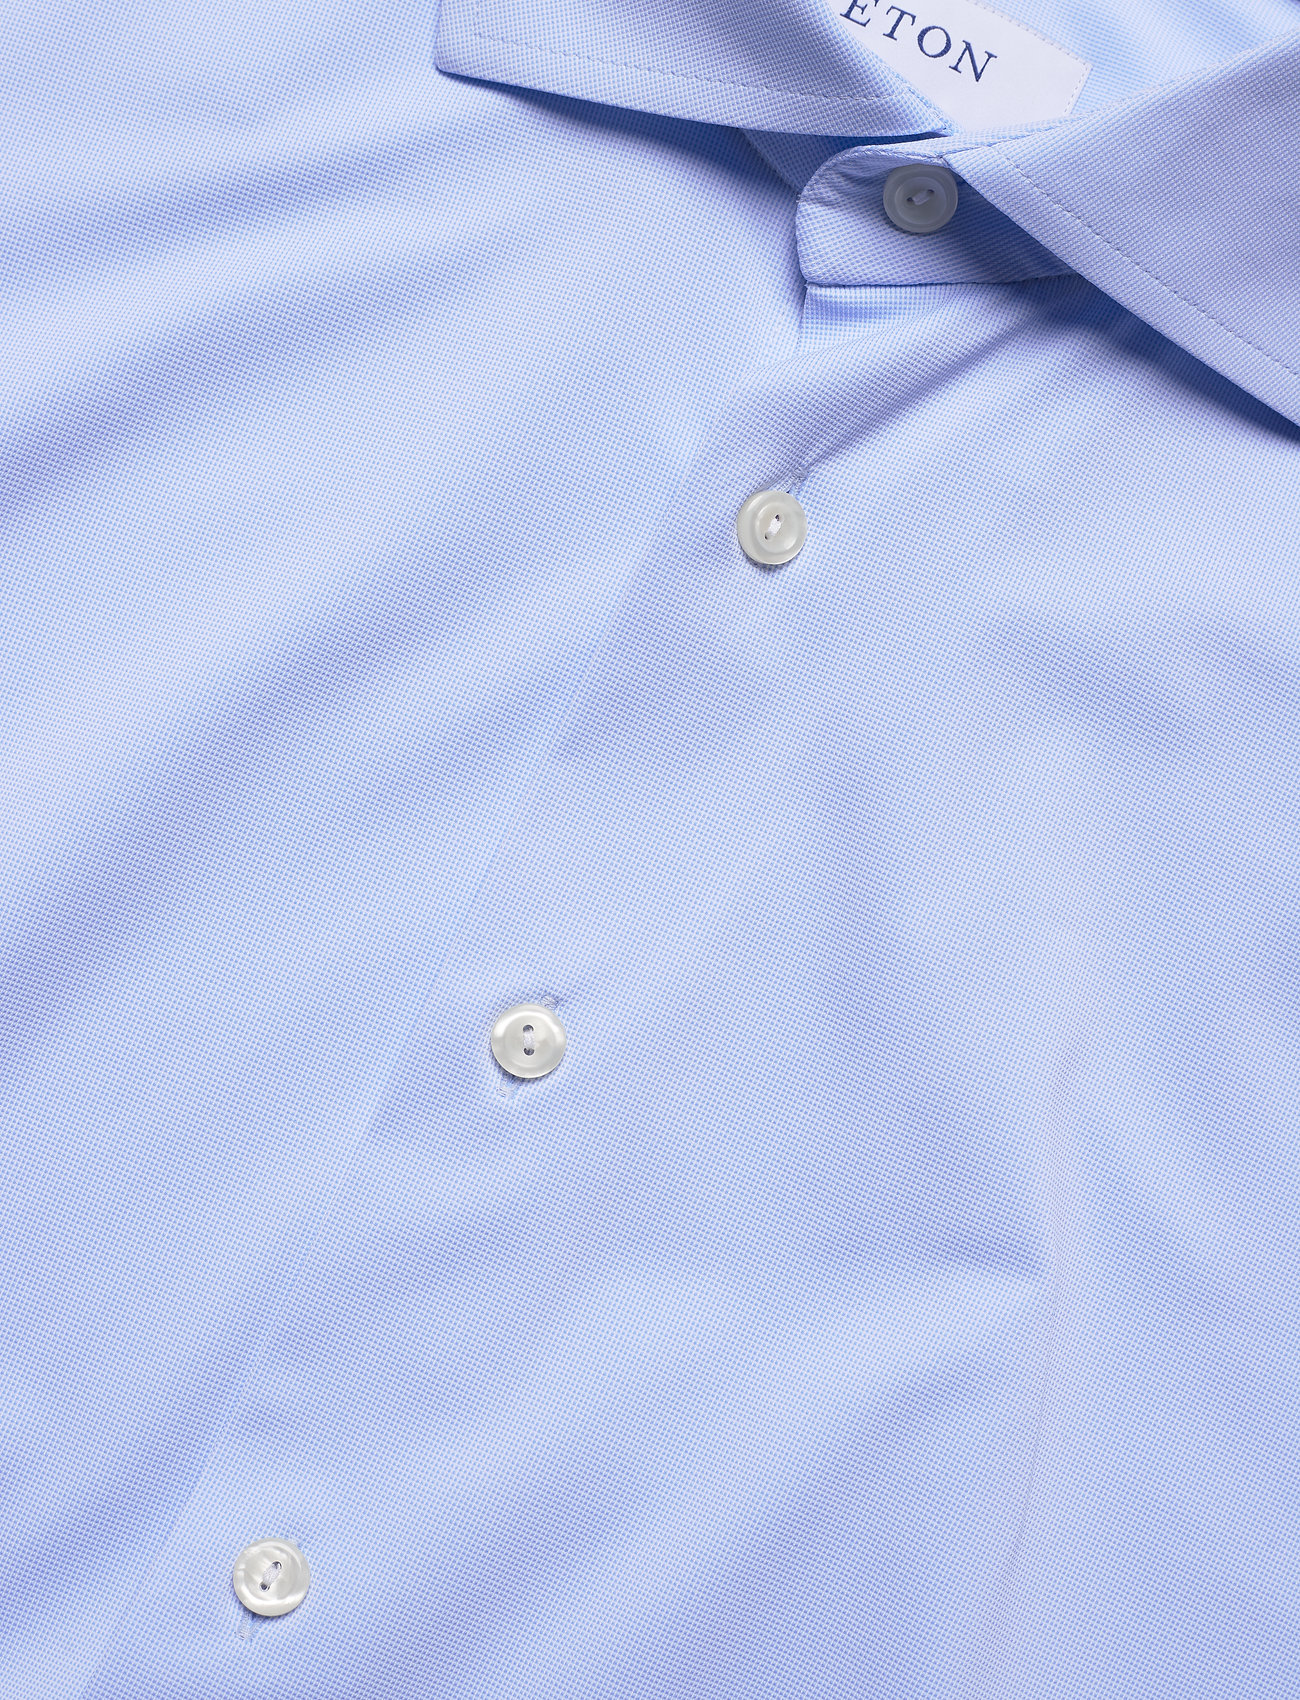 Eton - Men's shirt: Business 4-way Stretch - light blue - 6